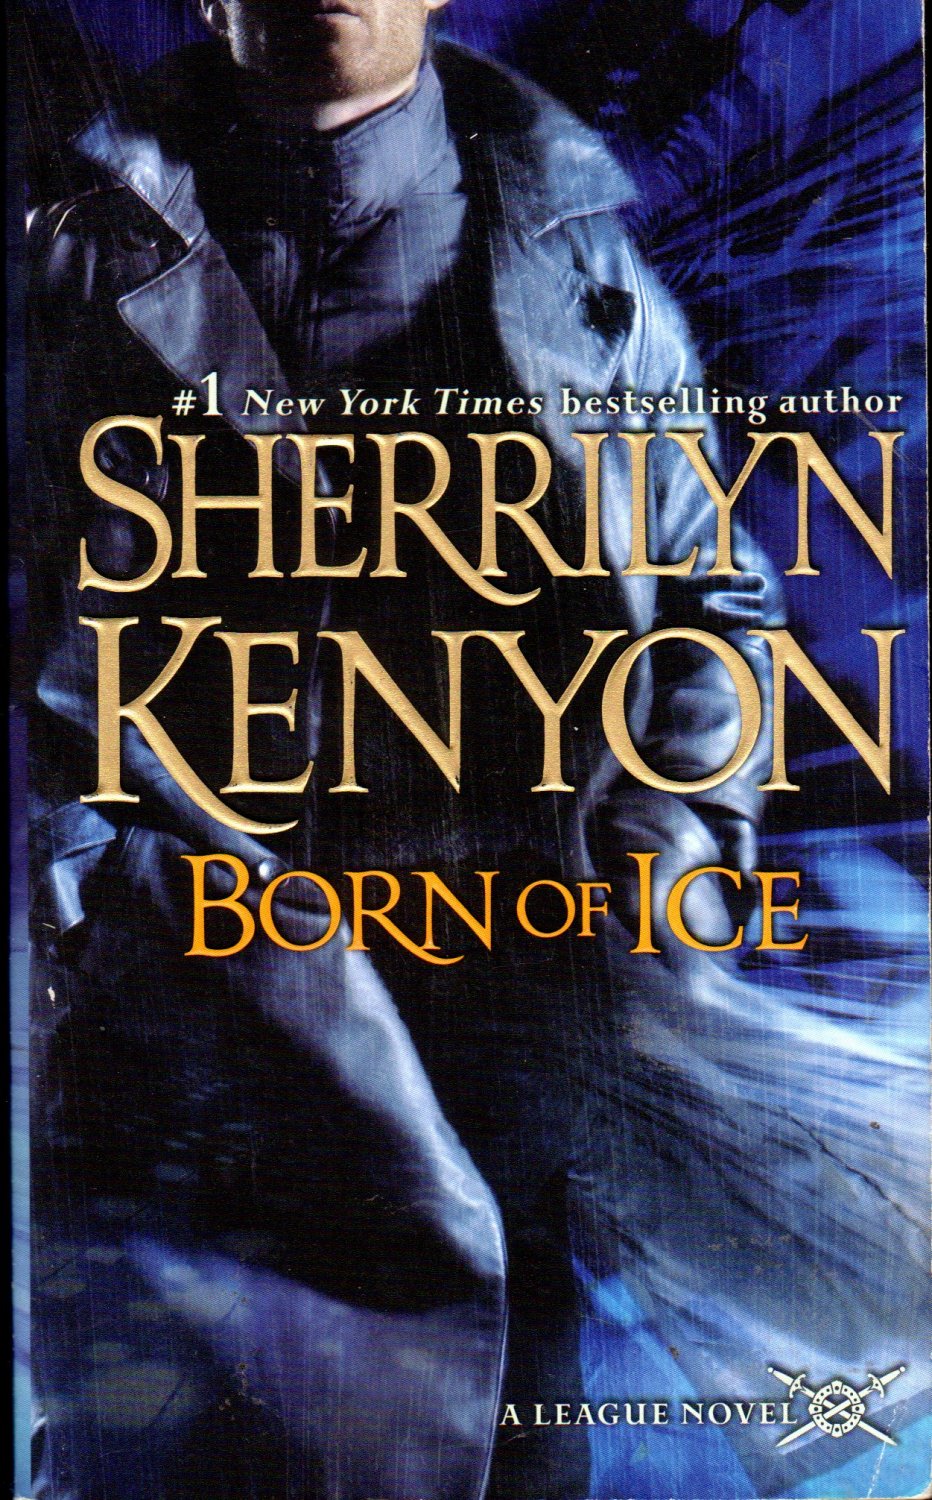 Born of Ice by Sherrilyn Kenyon